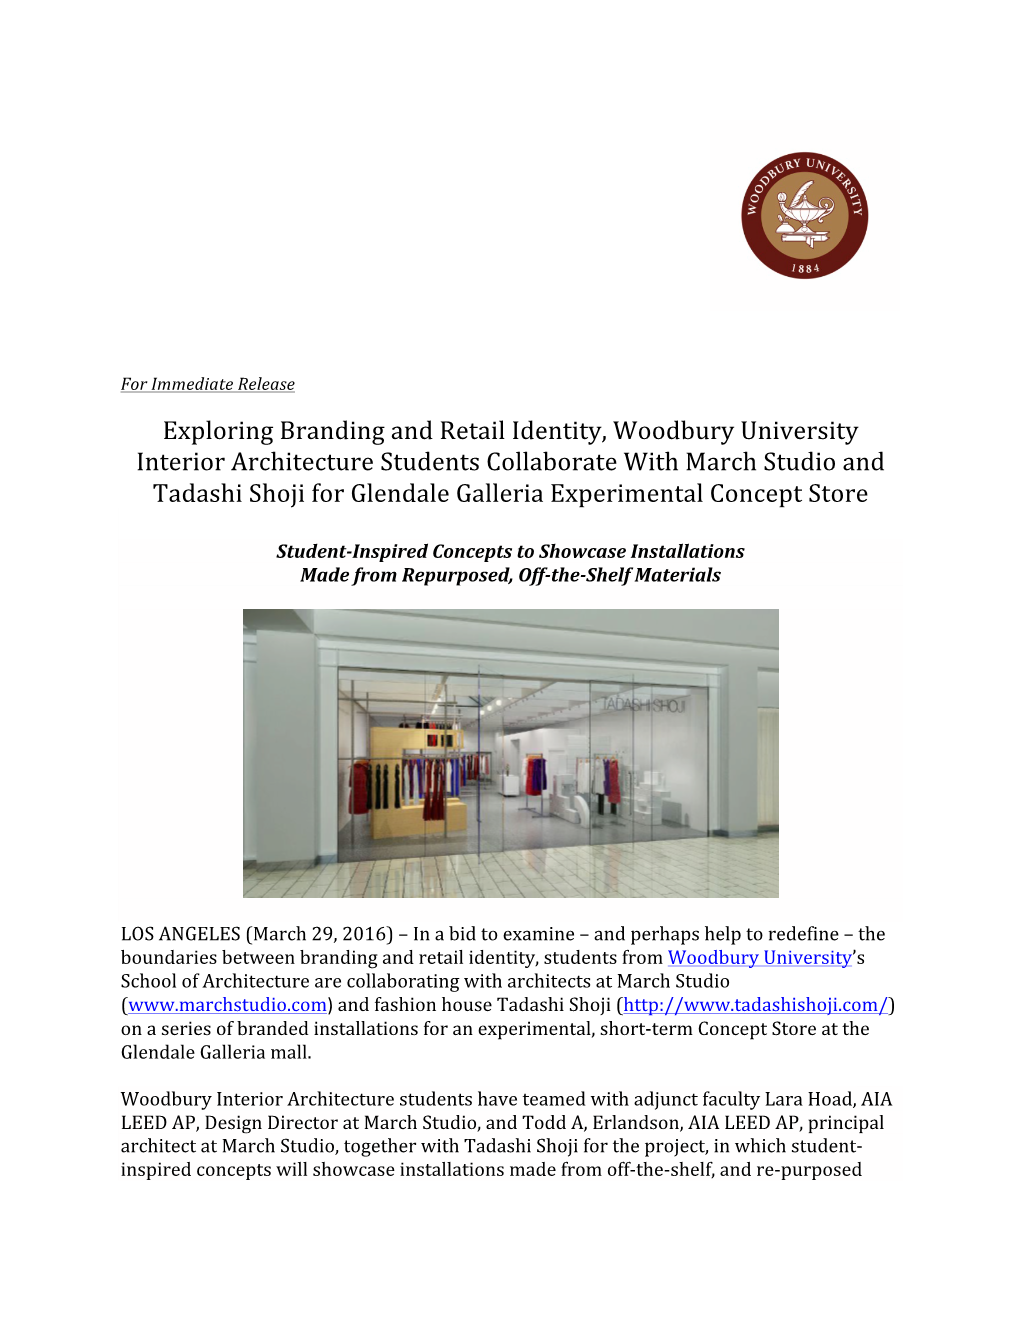 Exploring Branding and Retail Identity, Woodbury University Interior Architecture Stud